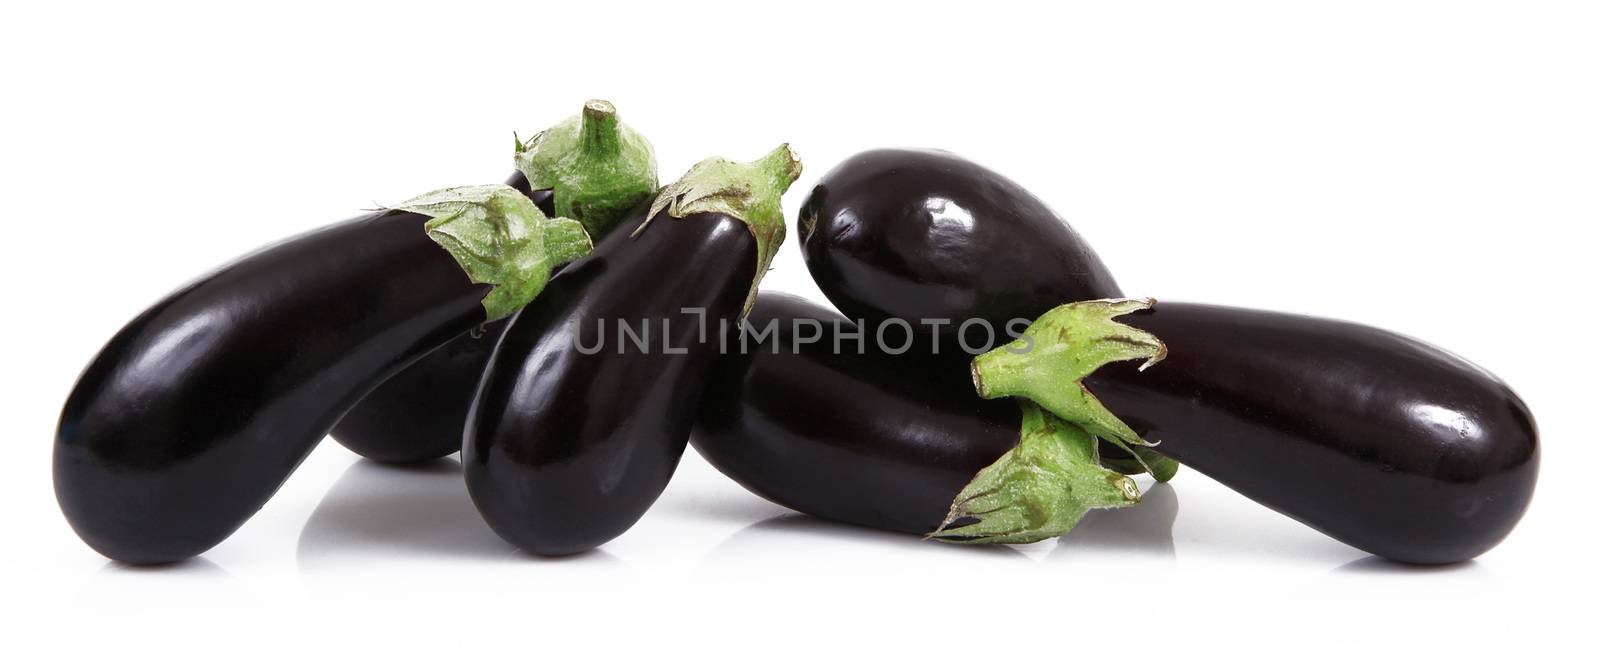 a fresh eggplant on white background